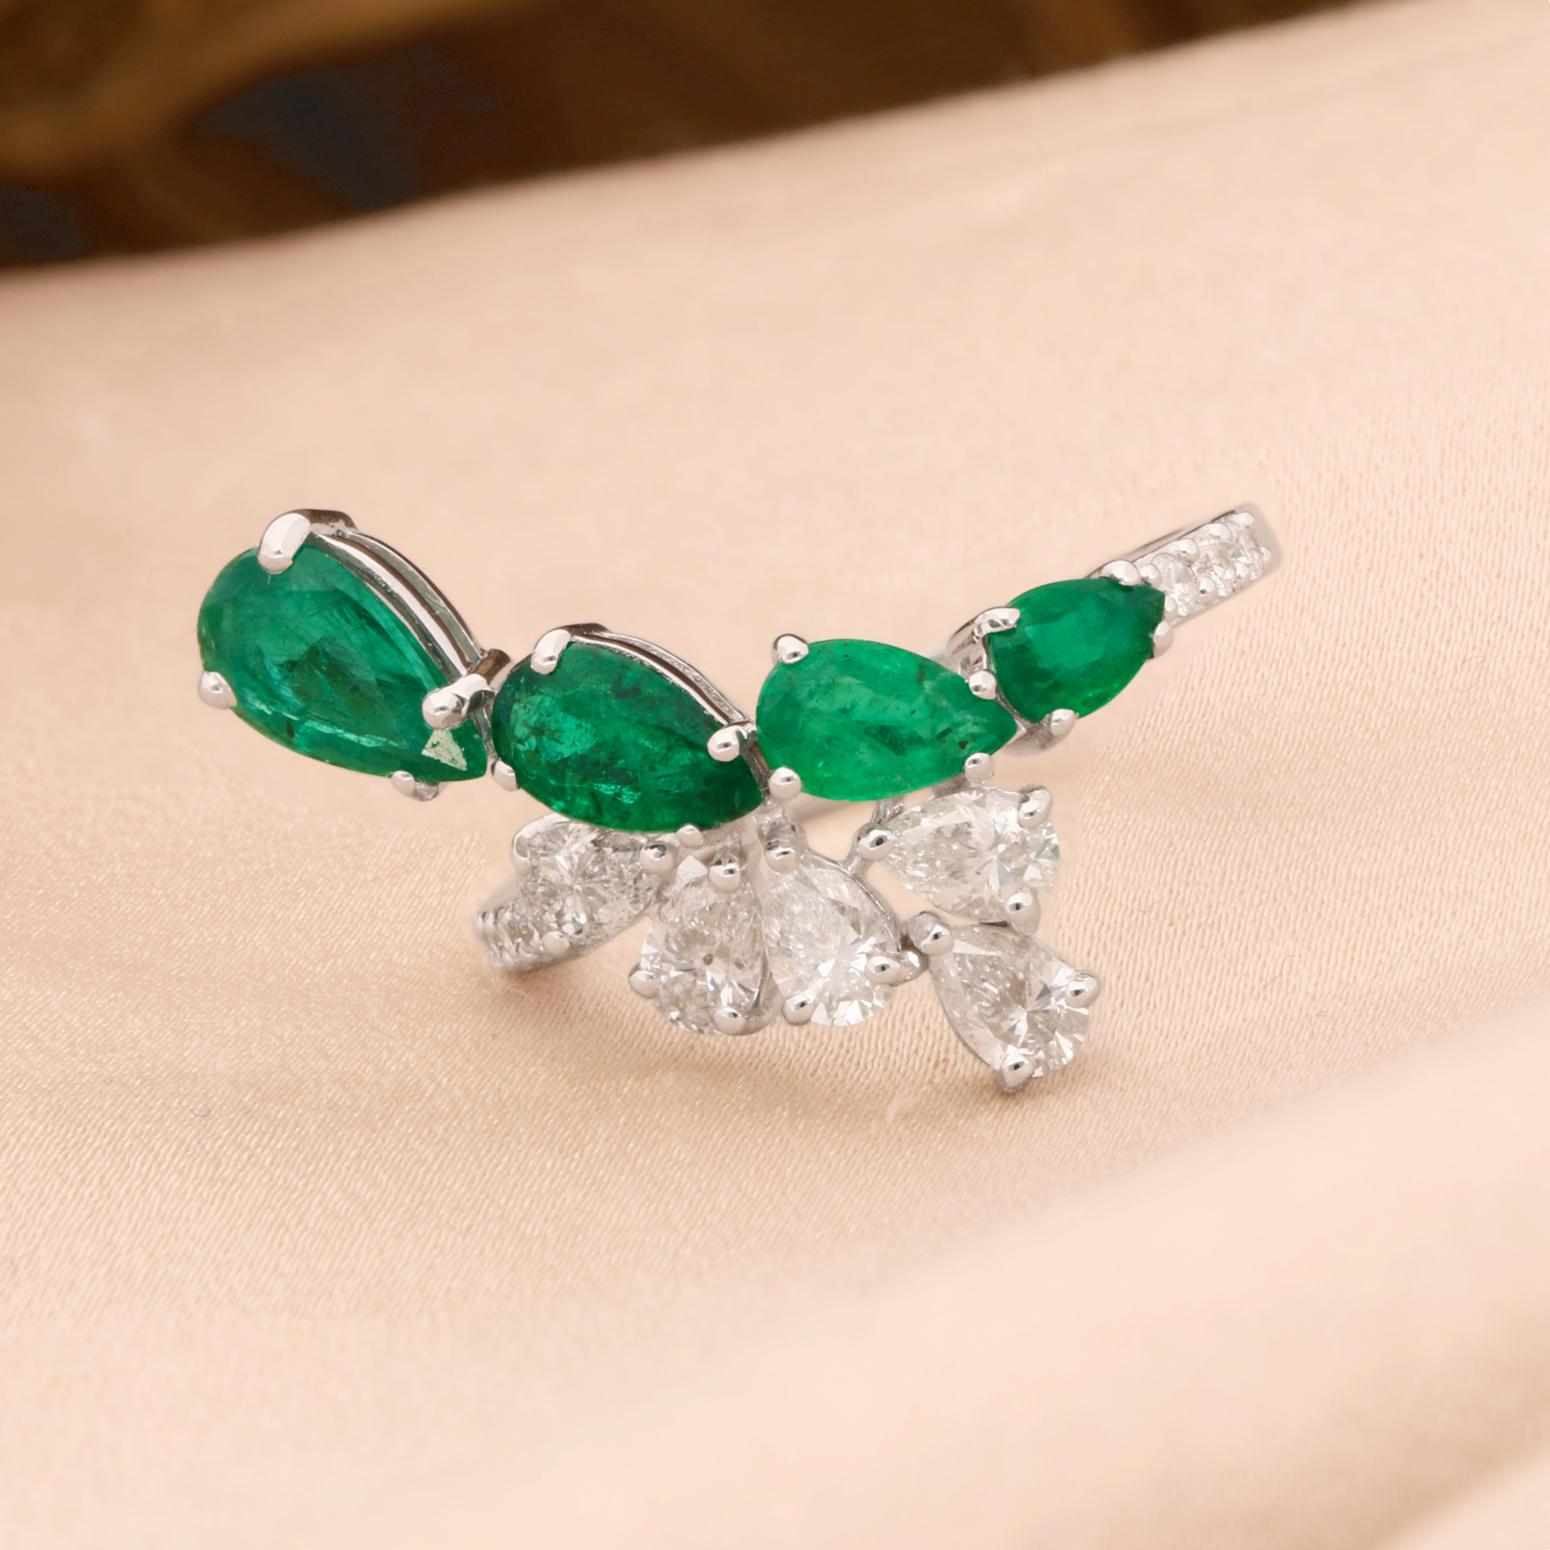 For Sale:  Pear Natural Emerald Gemstone Designer Ring Diamond 18k White Gold Fine Jewelry 4